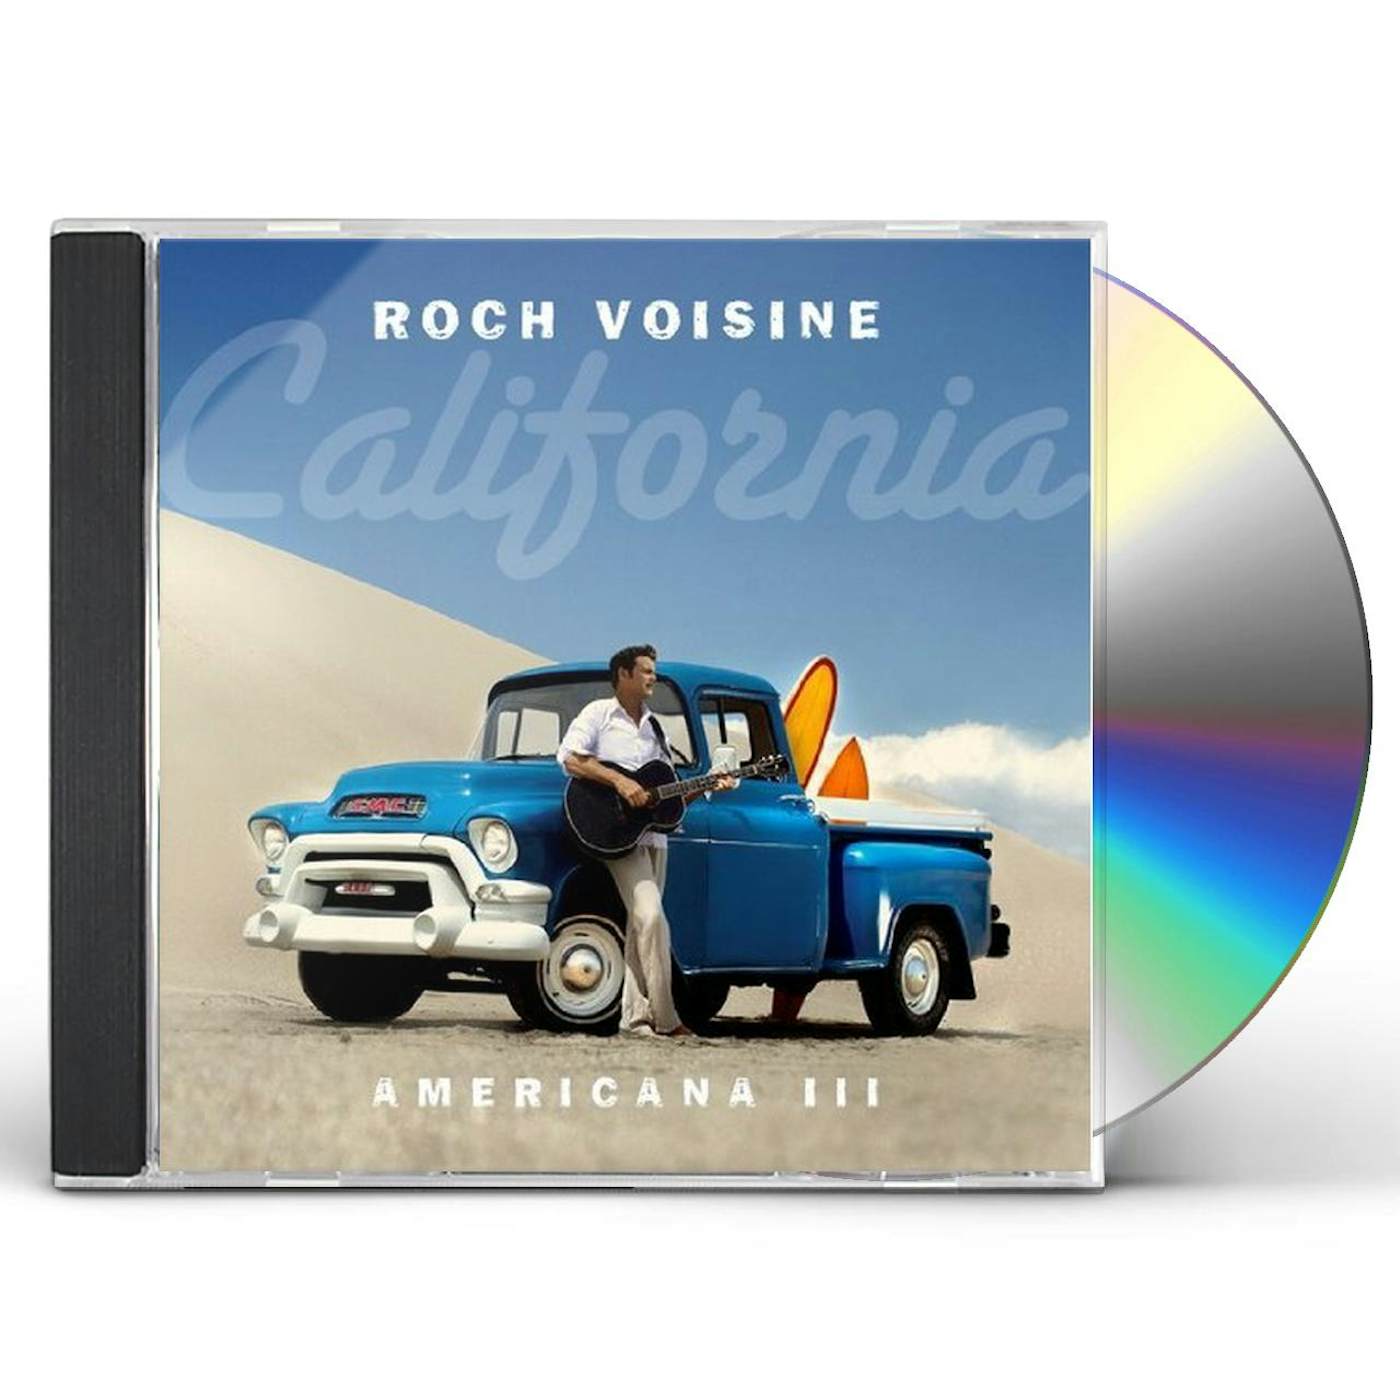 Roch Voisine VOL. 3-AMERICANA CALIFORNIA CD